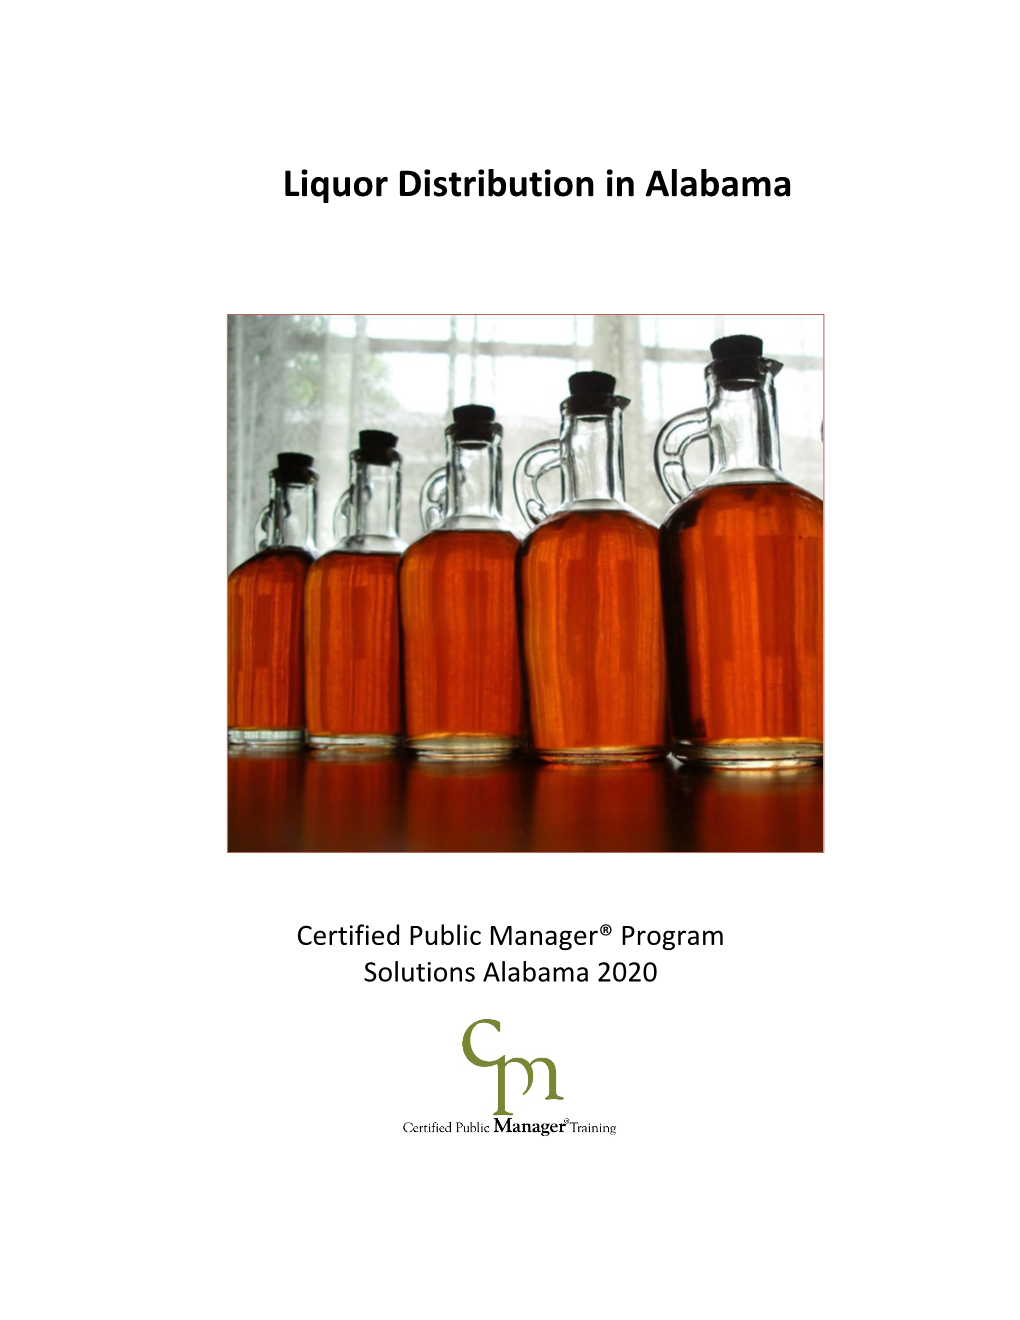 Liquor Distribution in Alabama Team Members